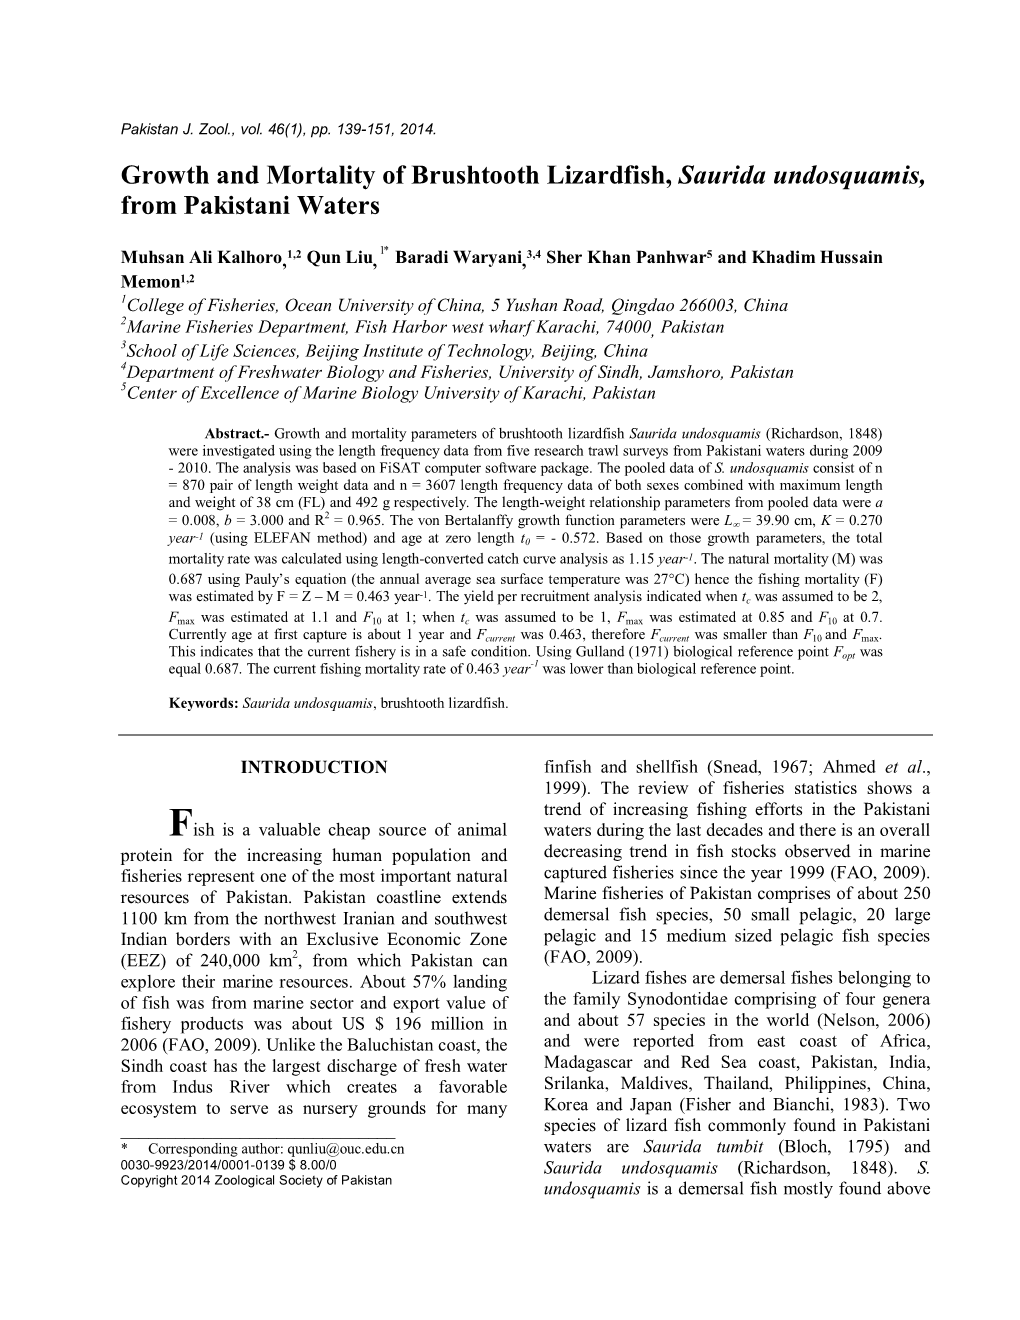 Growth and Mortality of Brushtooth Lizardfish, Saurida Undosquamis, from Pakistani Waters